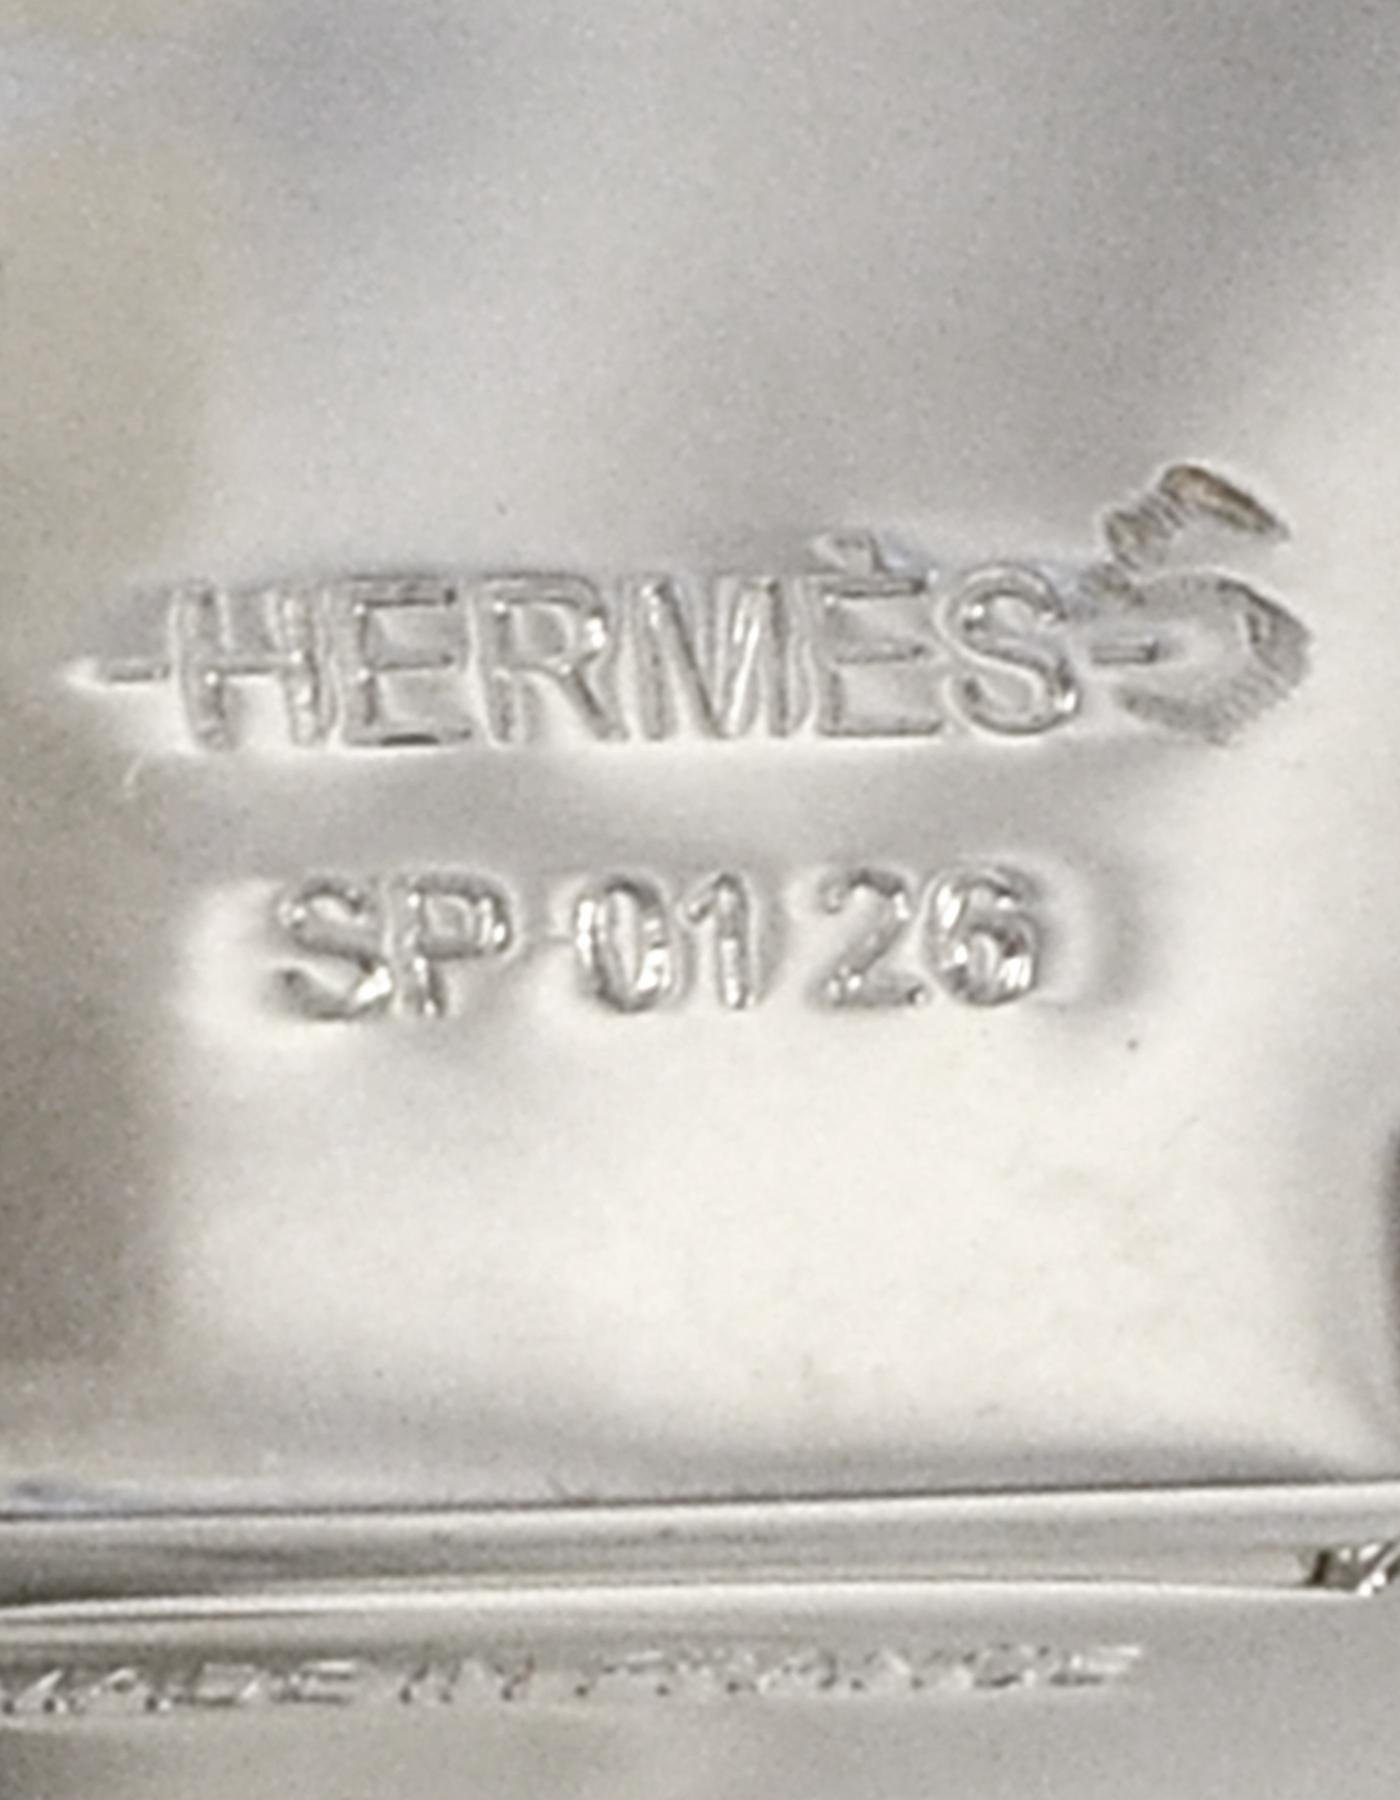 Hermes NWT Palladium/Pannnacotta White Enamel Wide Hinged Bracelet sz Small 1